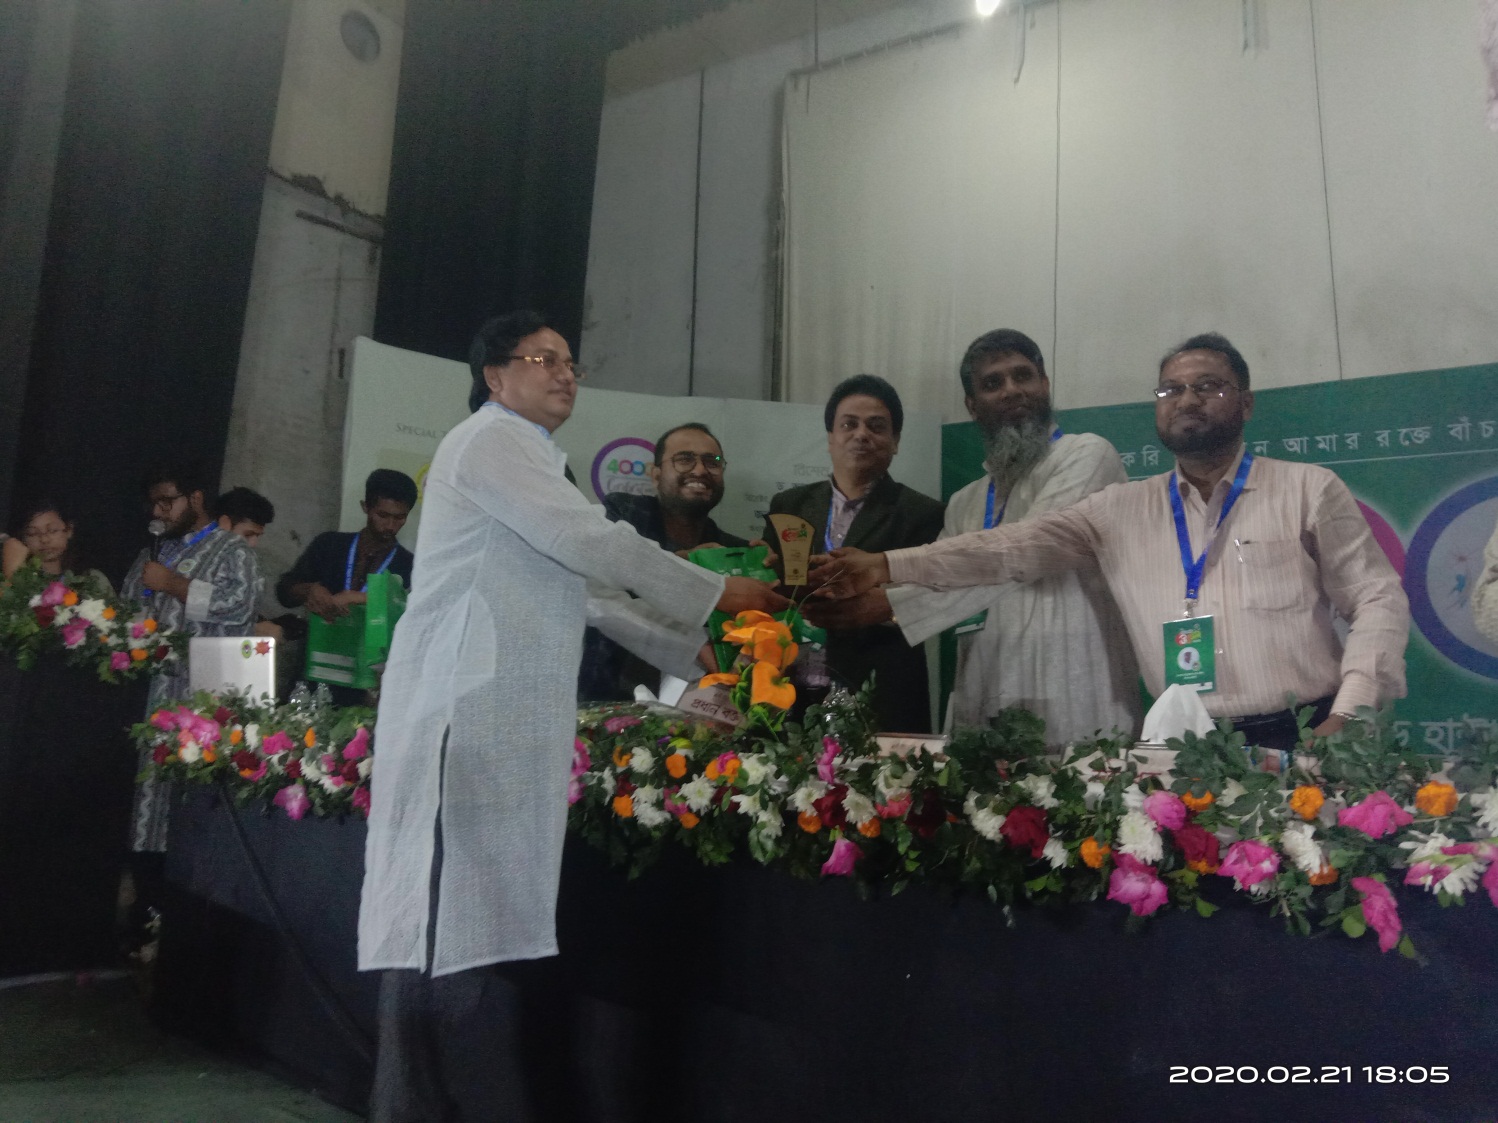 Noakhali Blood Hunter awarded crest to Md. Gias Uddin Mithu, chairman of Begumganj-Sonaimuri Shikkha O Sastha Unnayan Foundation.